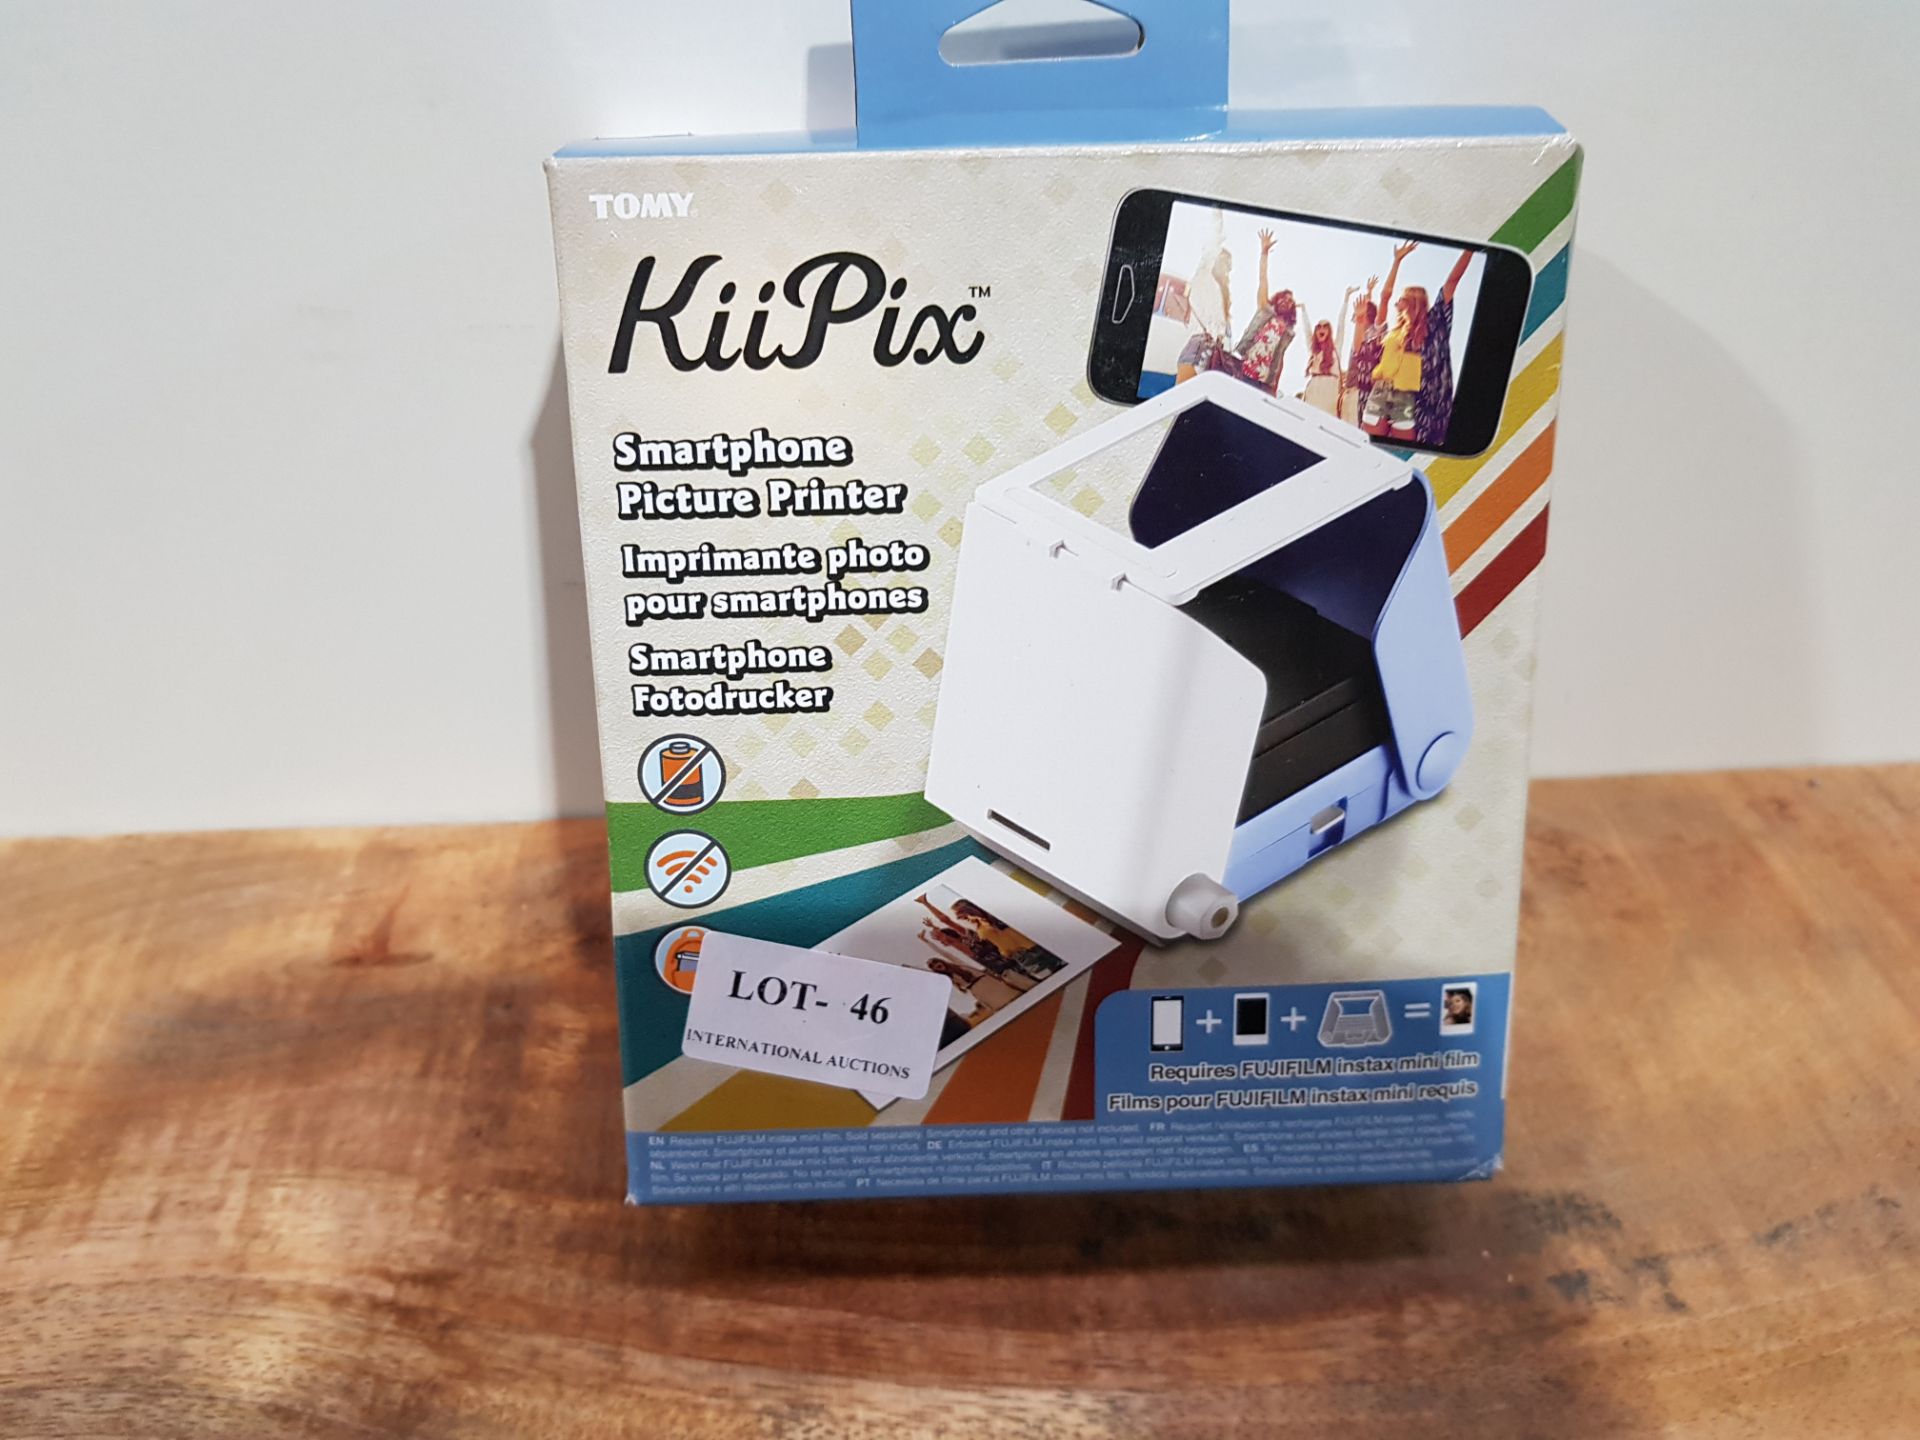 Kiipix Portable Photo Printer | Instant Compact Printer For iPhone & Android | Print Instax Photos